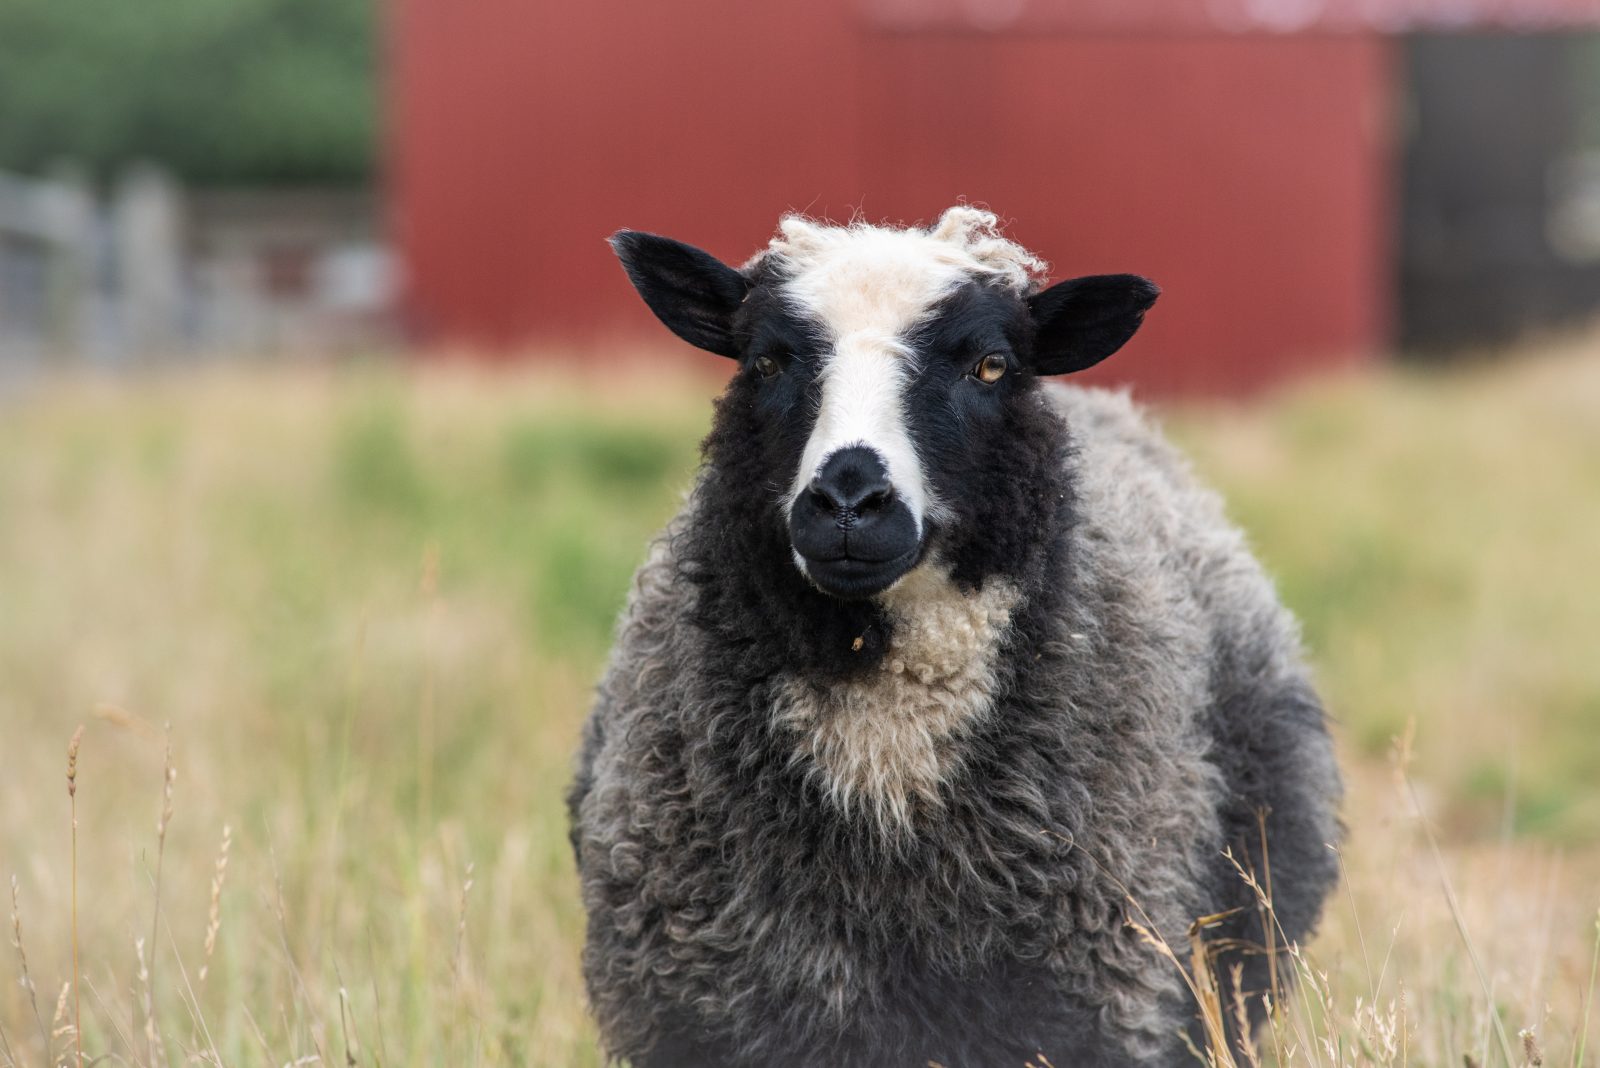 Lorelei sheep at Farm Sanctuary.